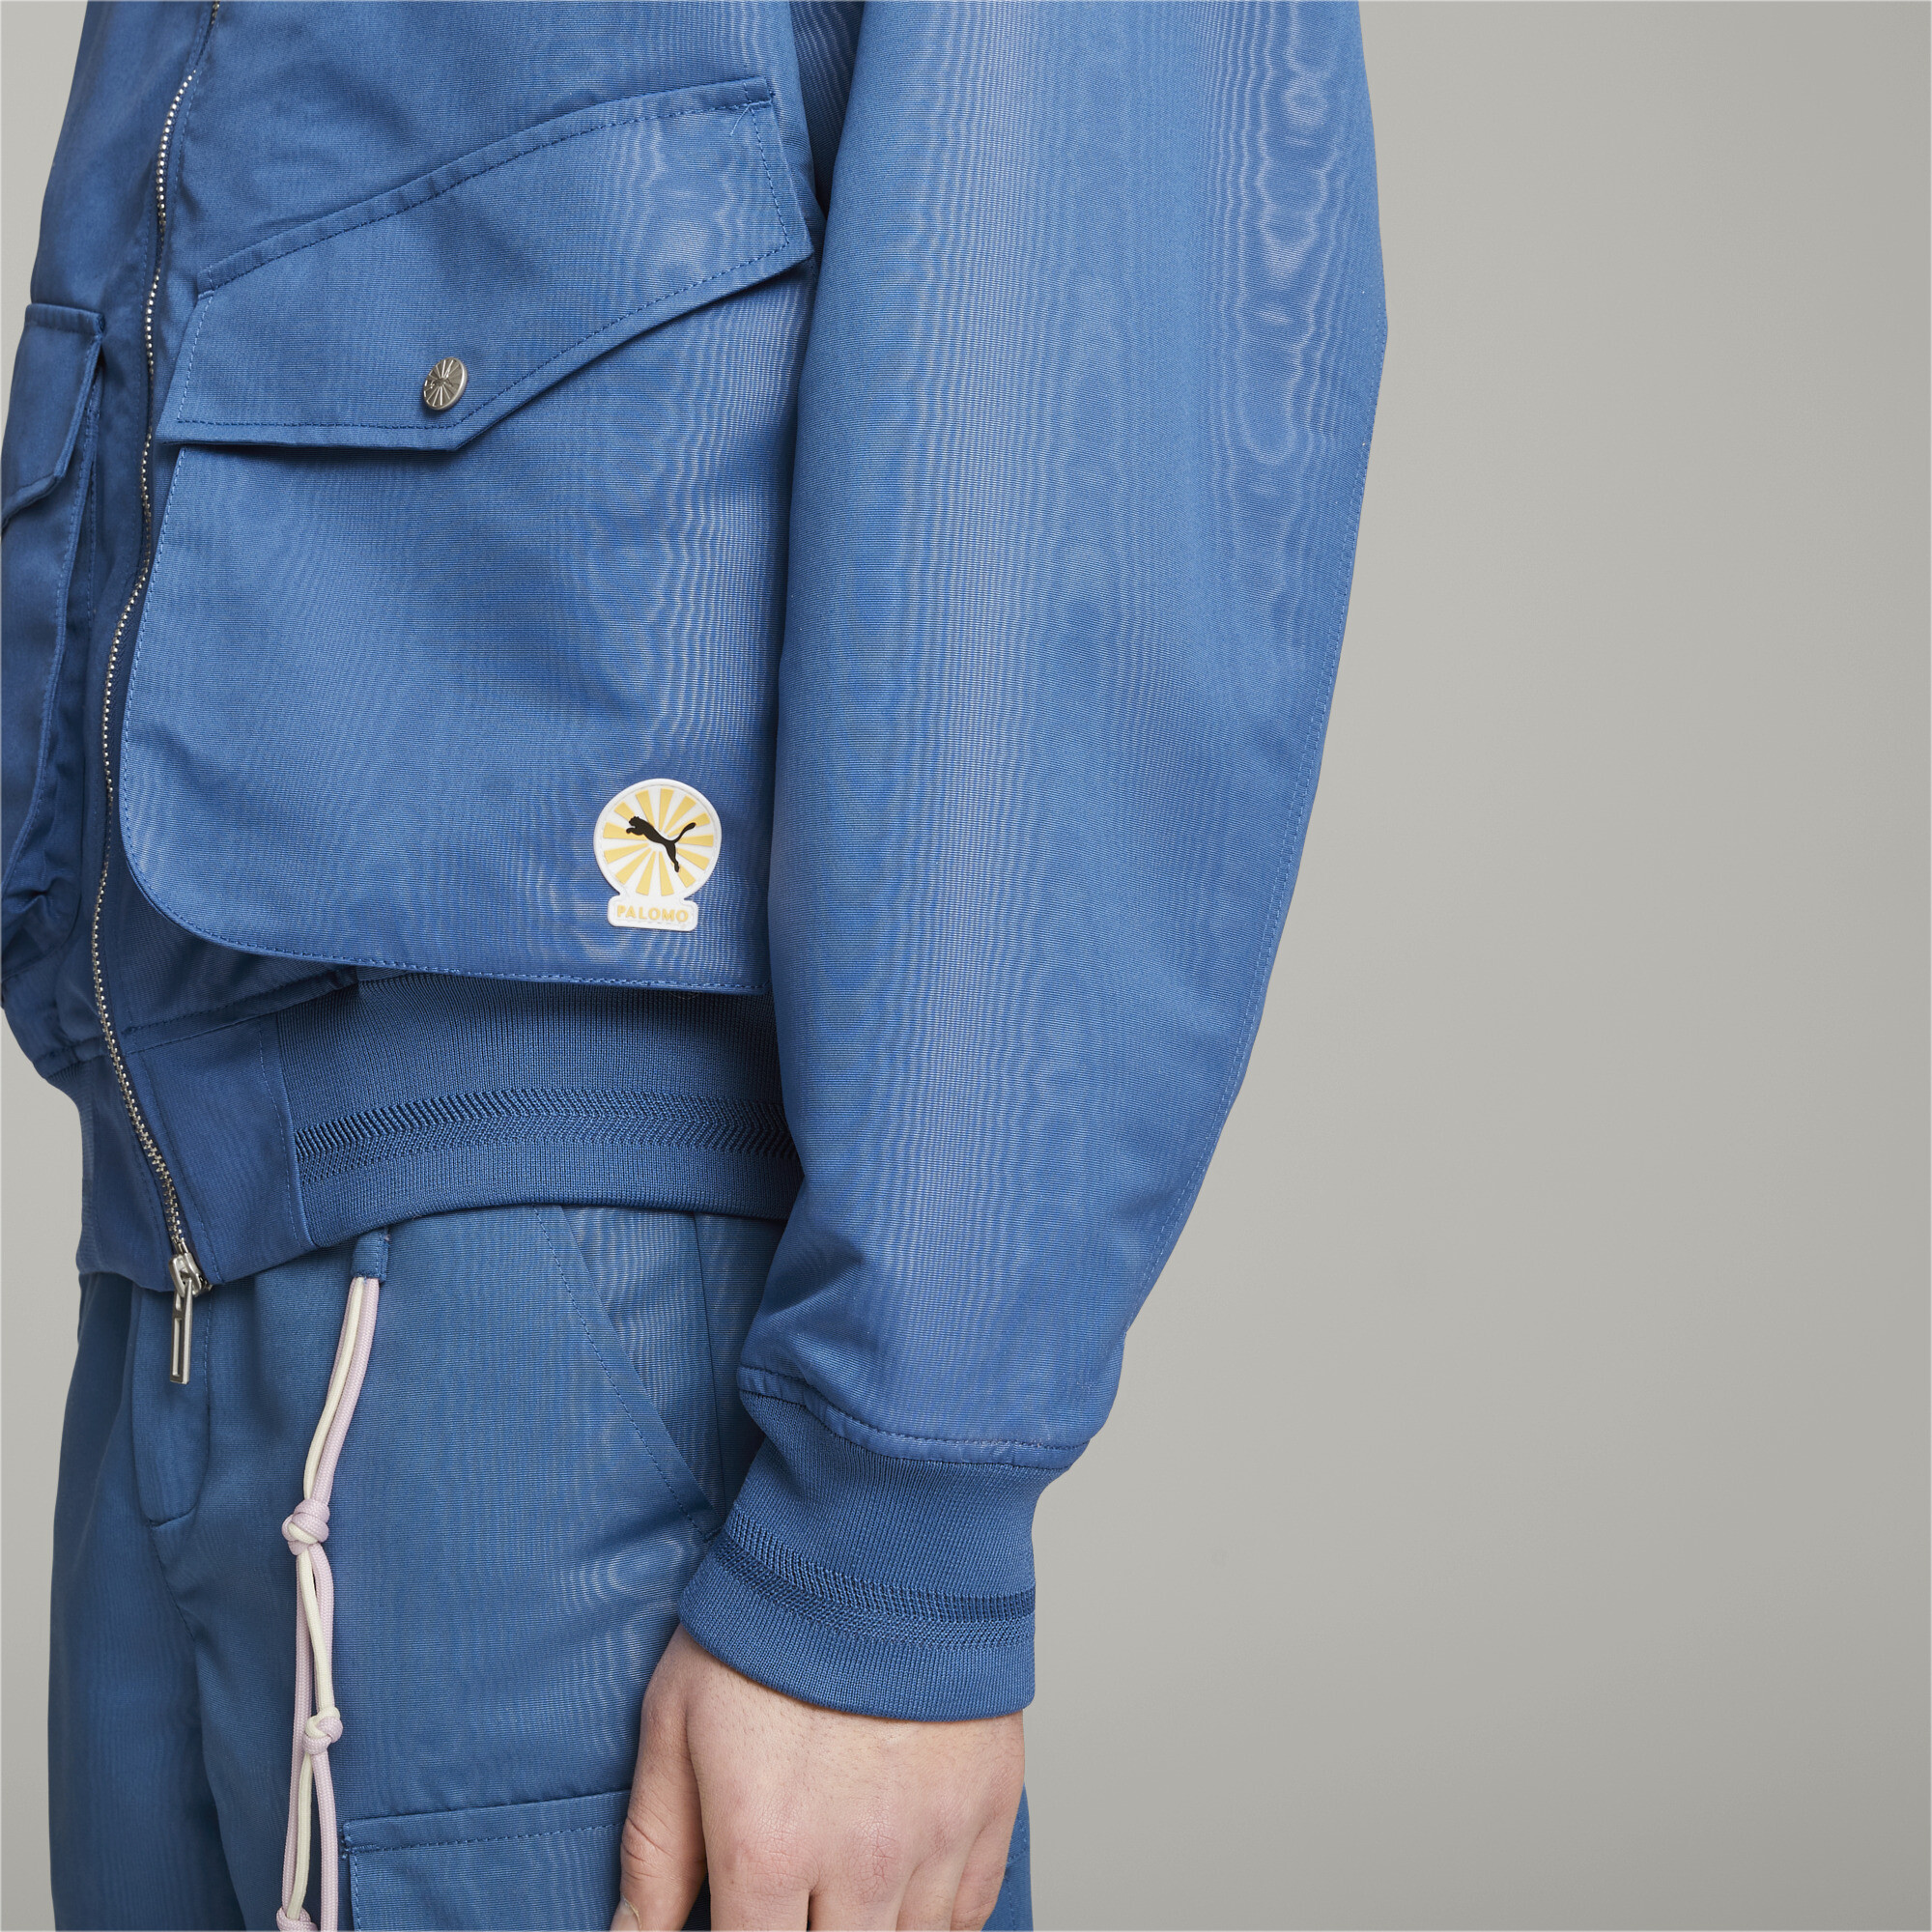 Men's PUMA X PALOMO Jacket In Blue, Size XS